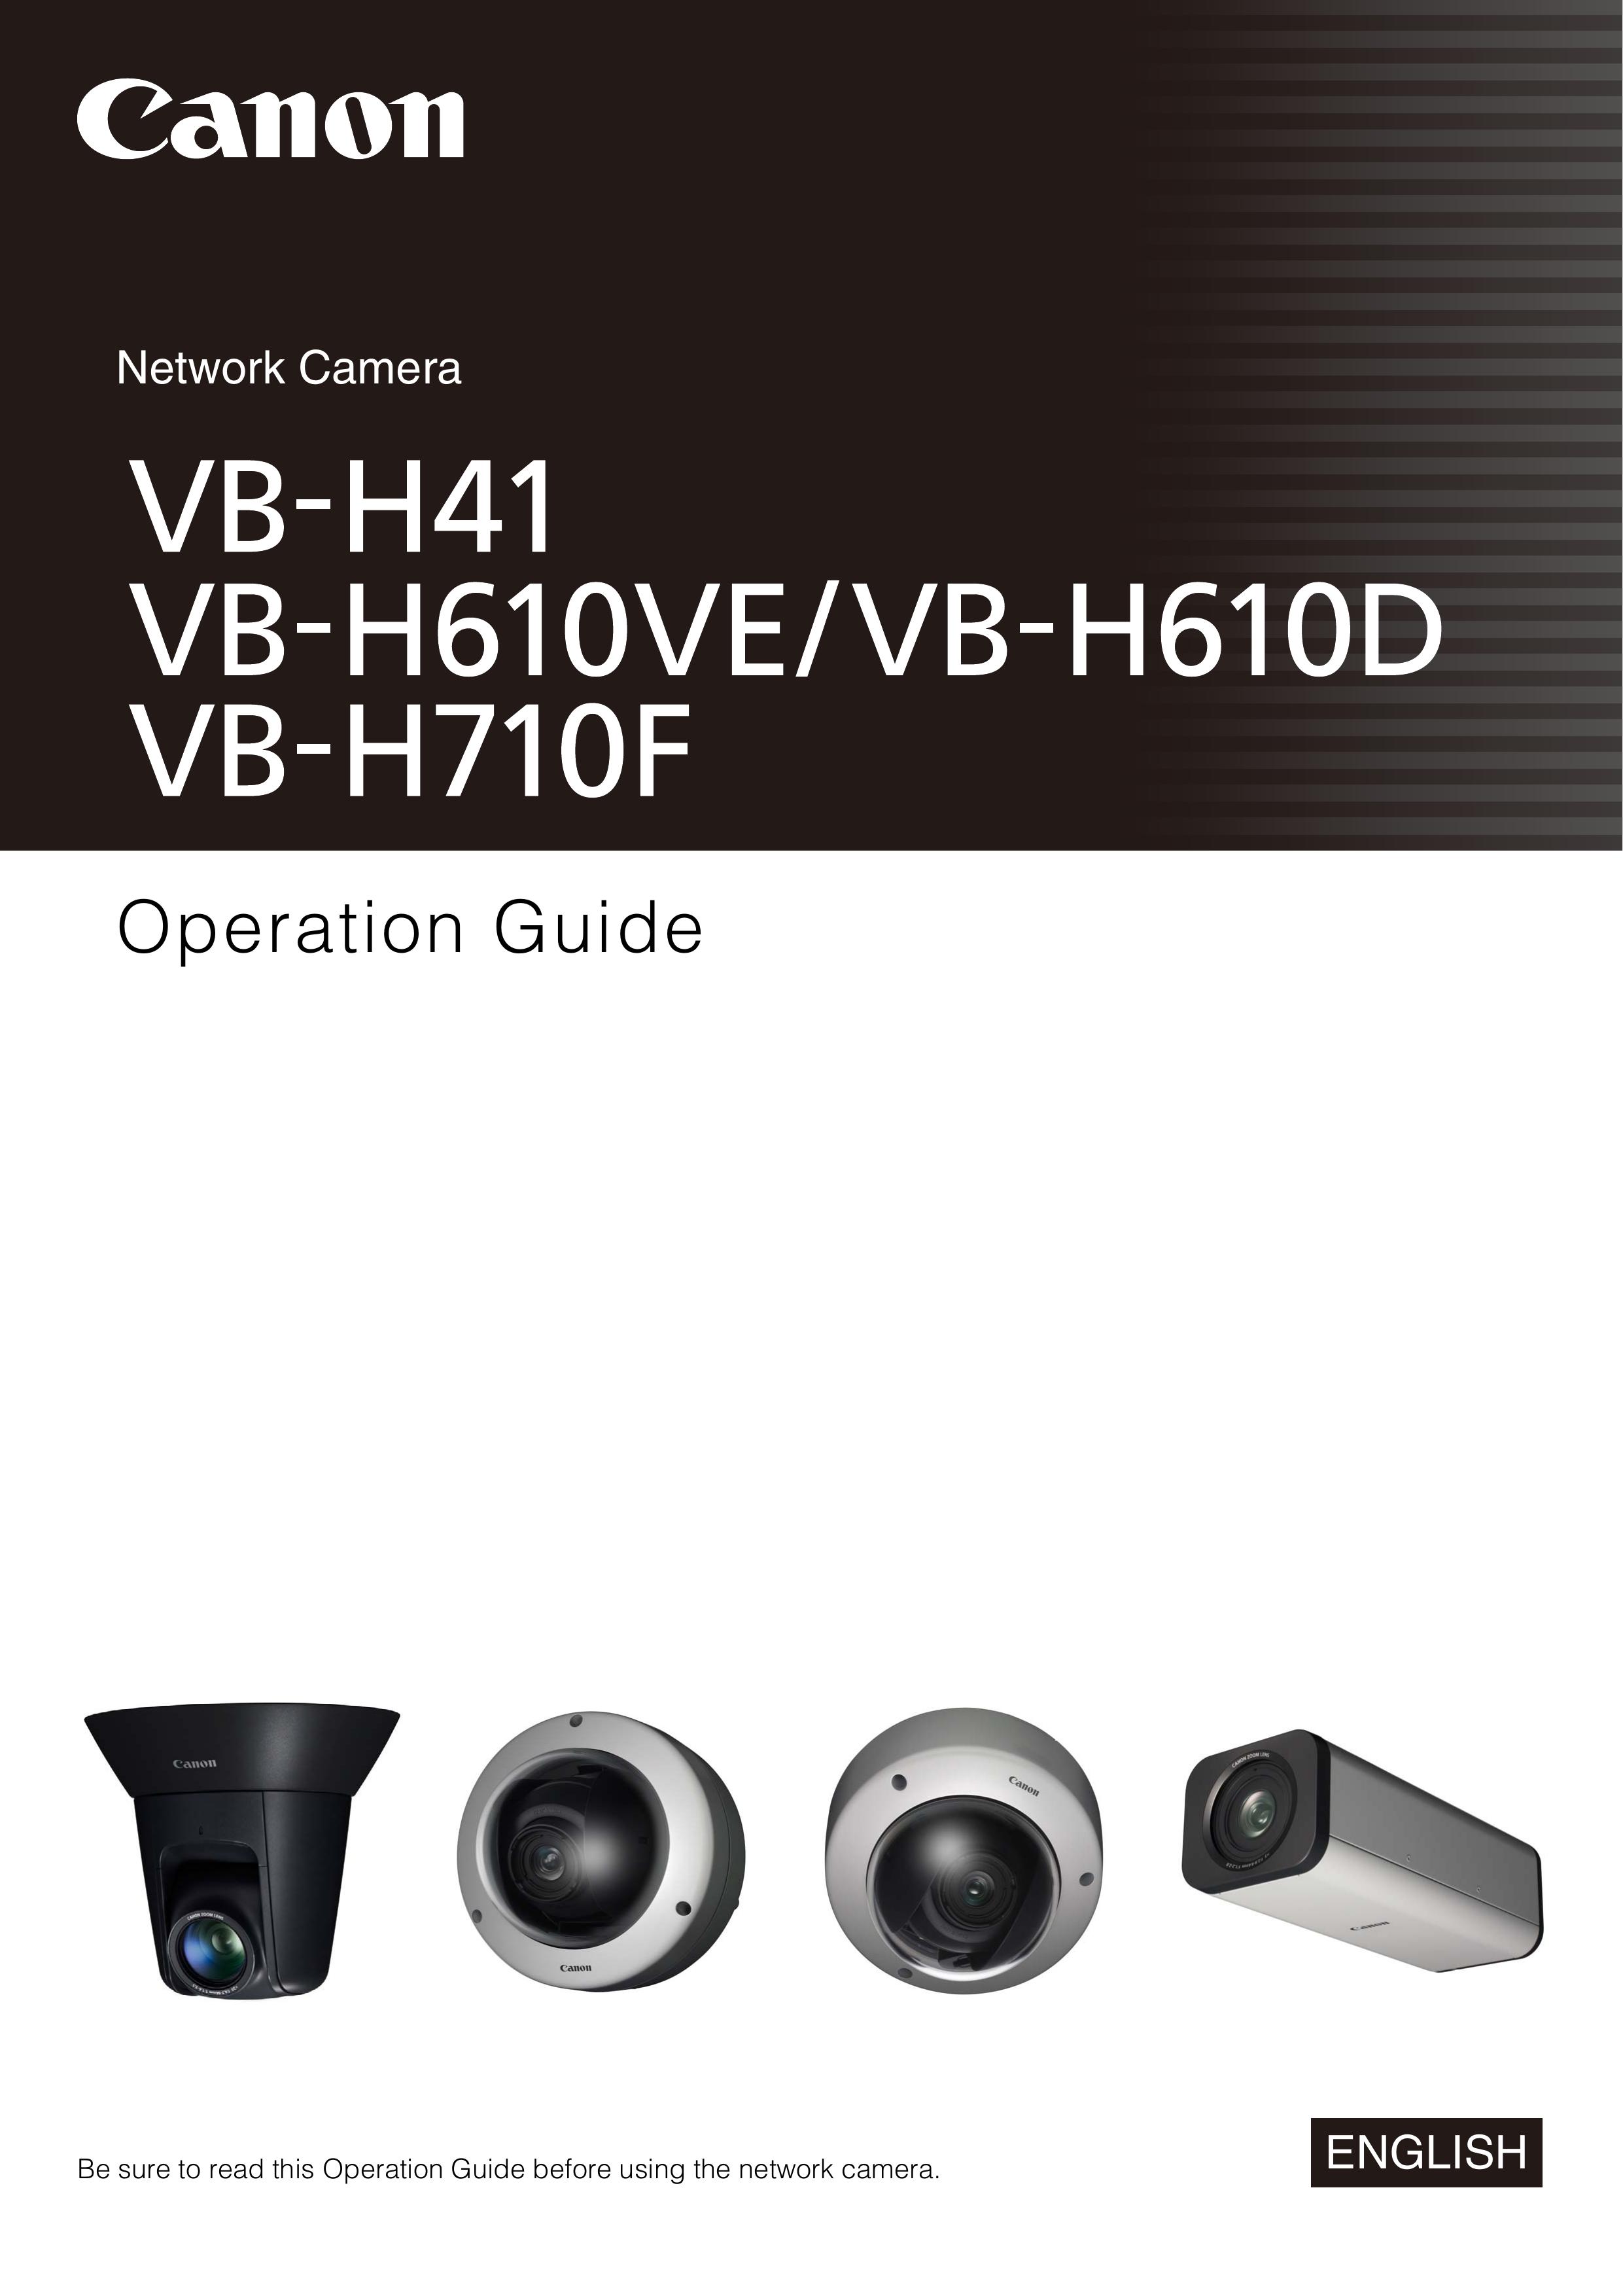 Canon VB-H610VE Security Camera User Manual